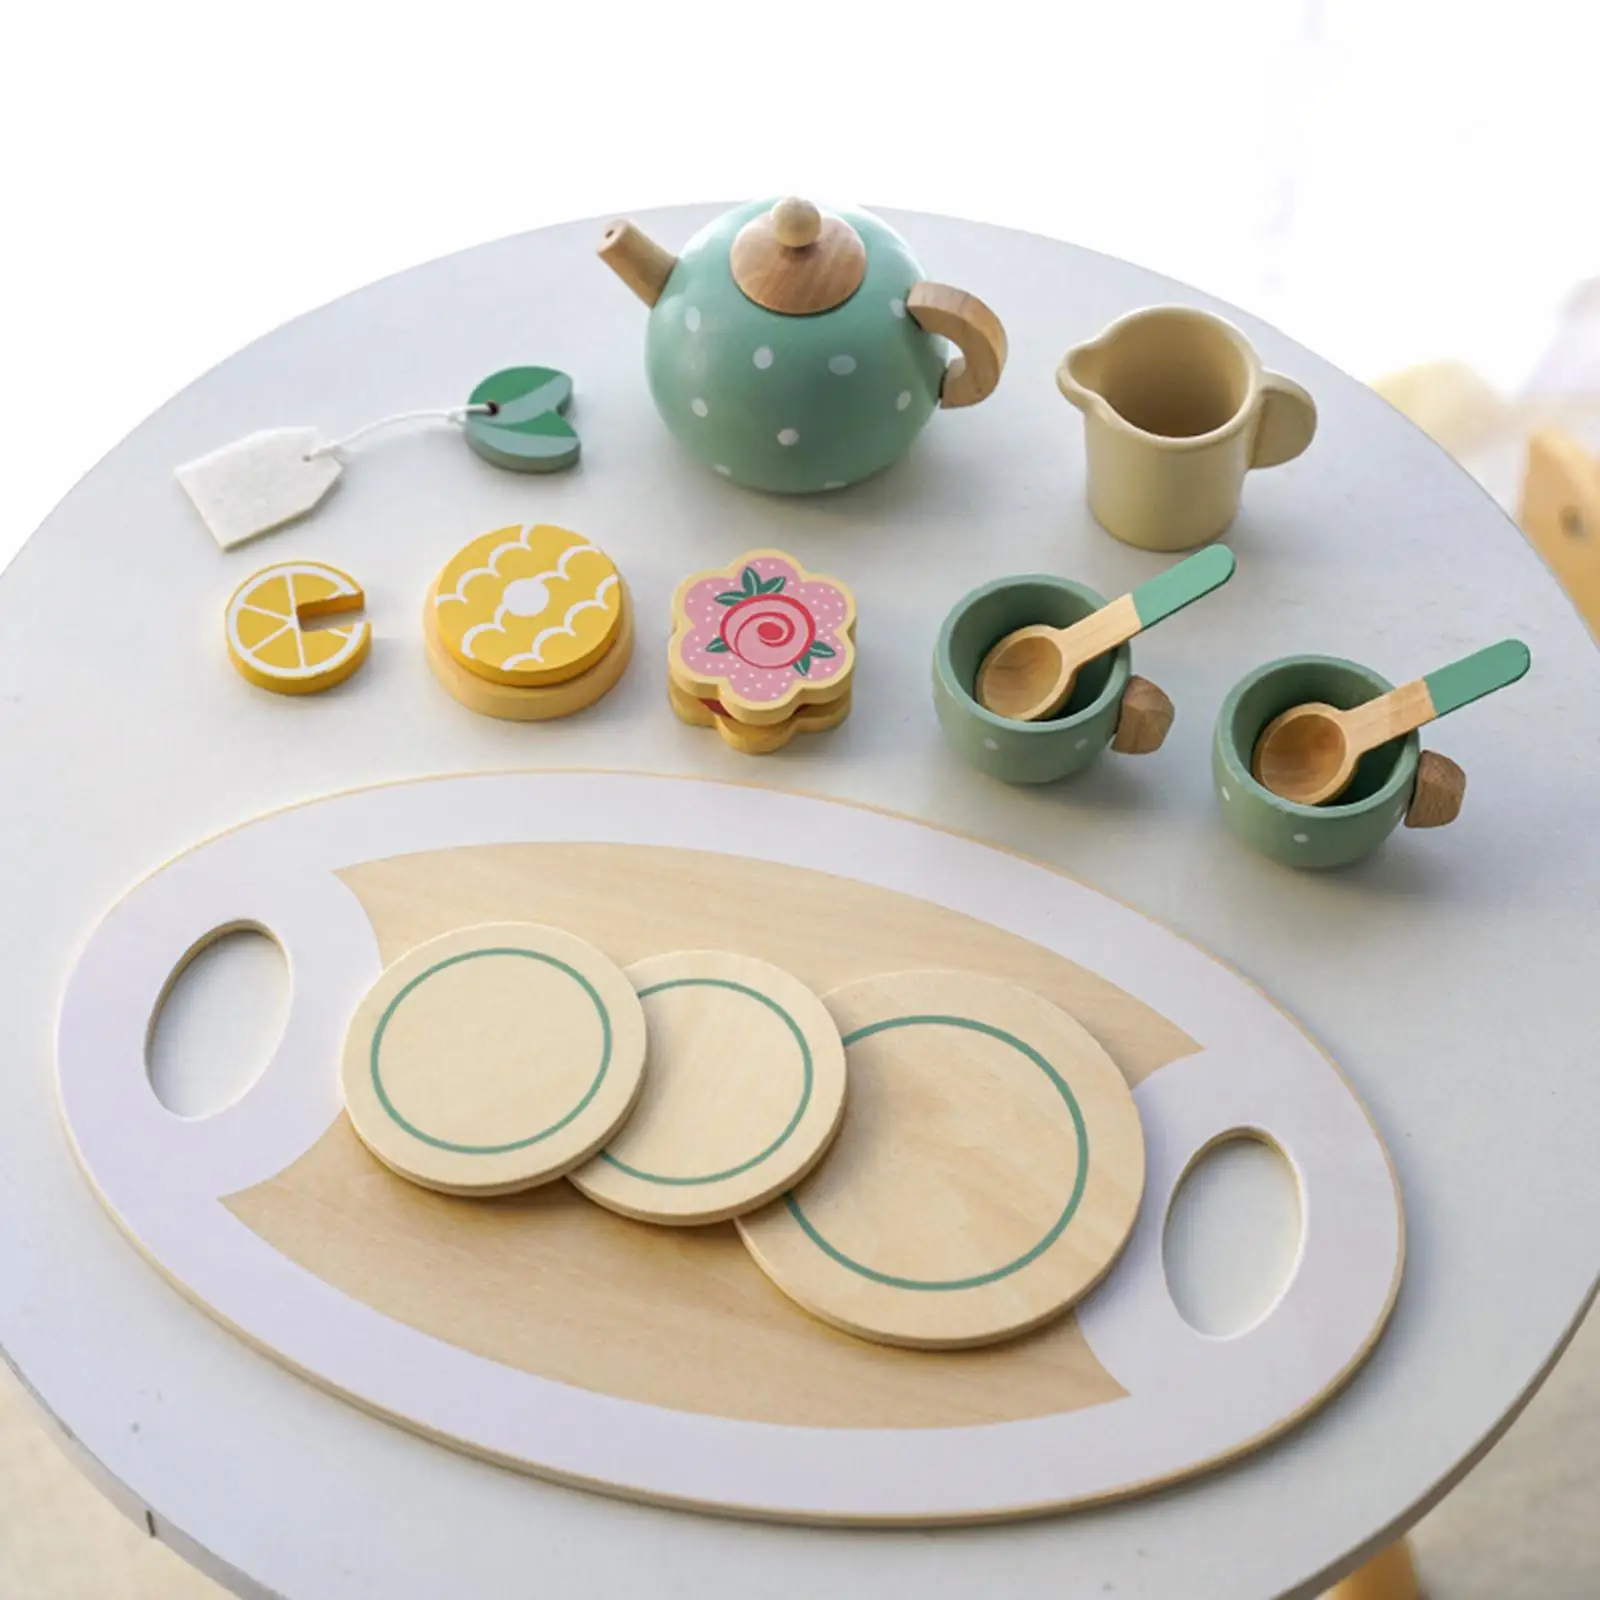 15x Tea Party Tableware Kitchen Playset for Children Preschool Kids